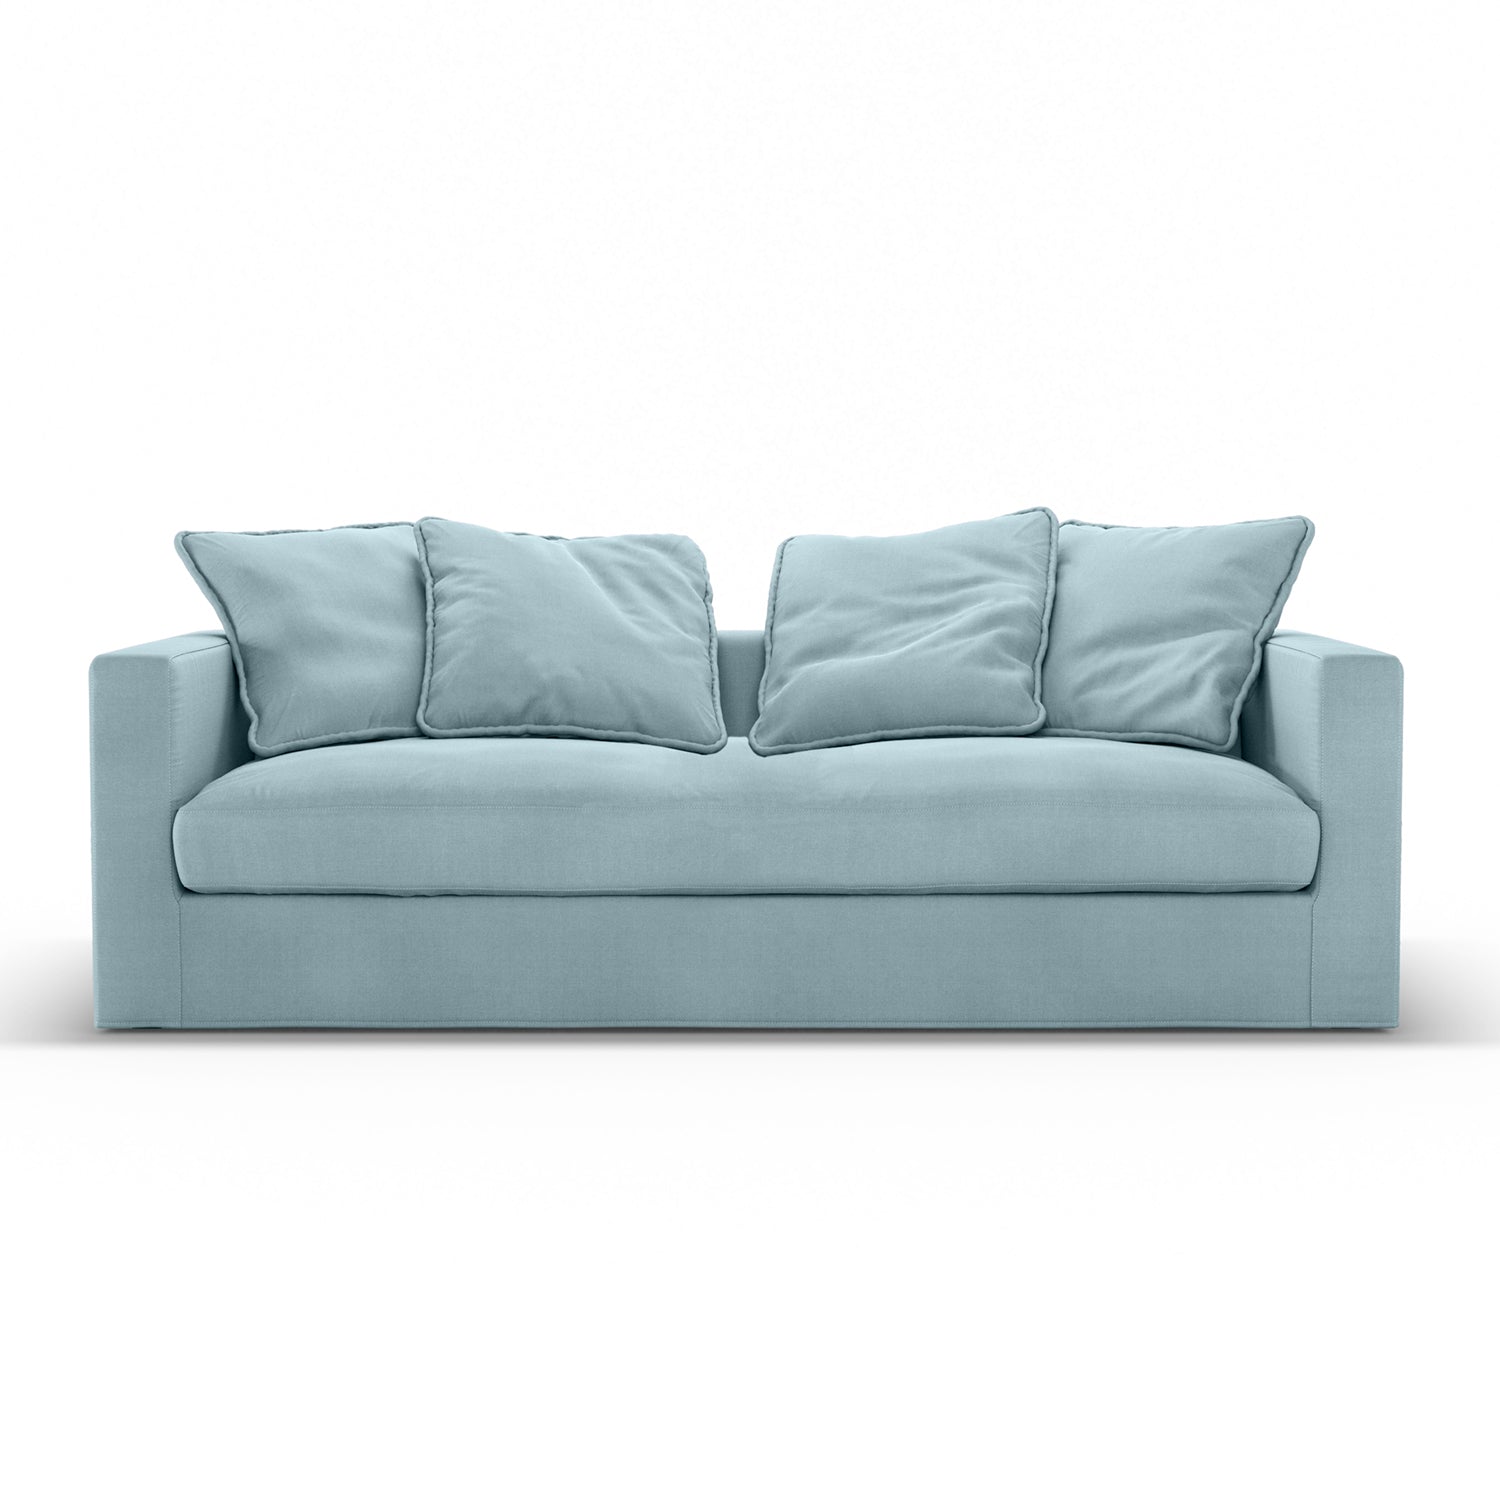 Compact Comfortable Design, mint green cotton sofa